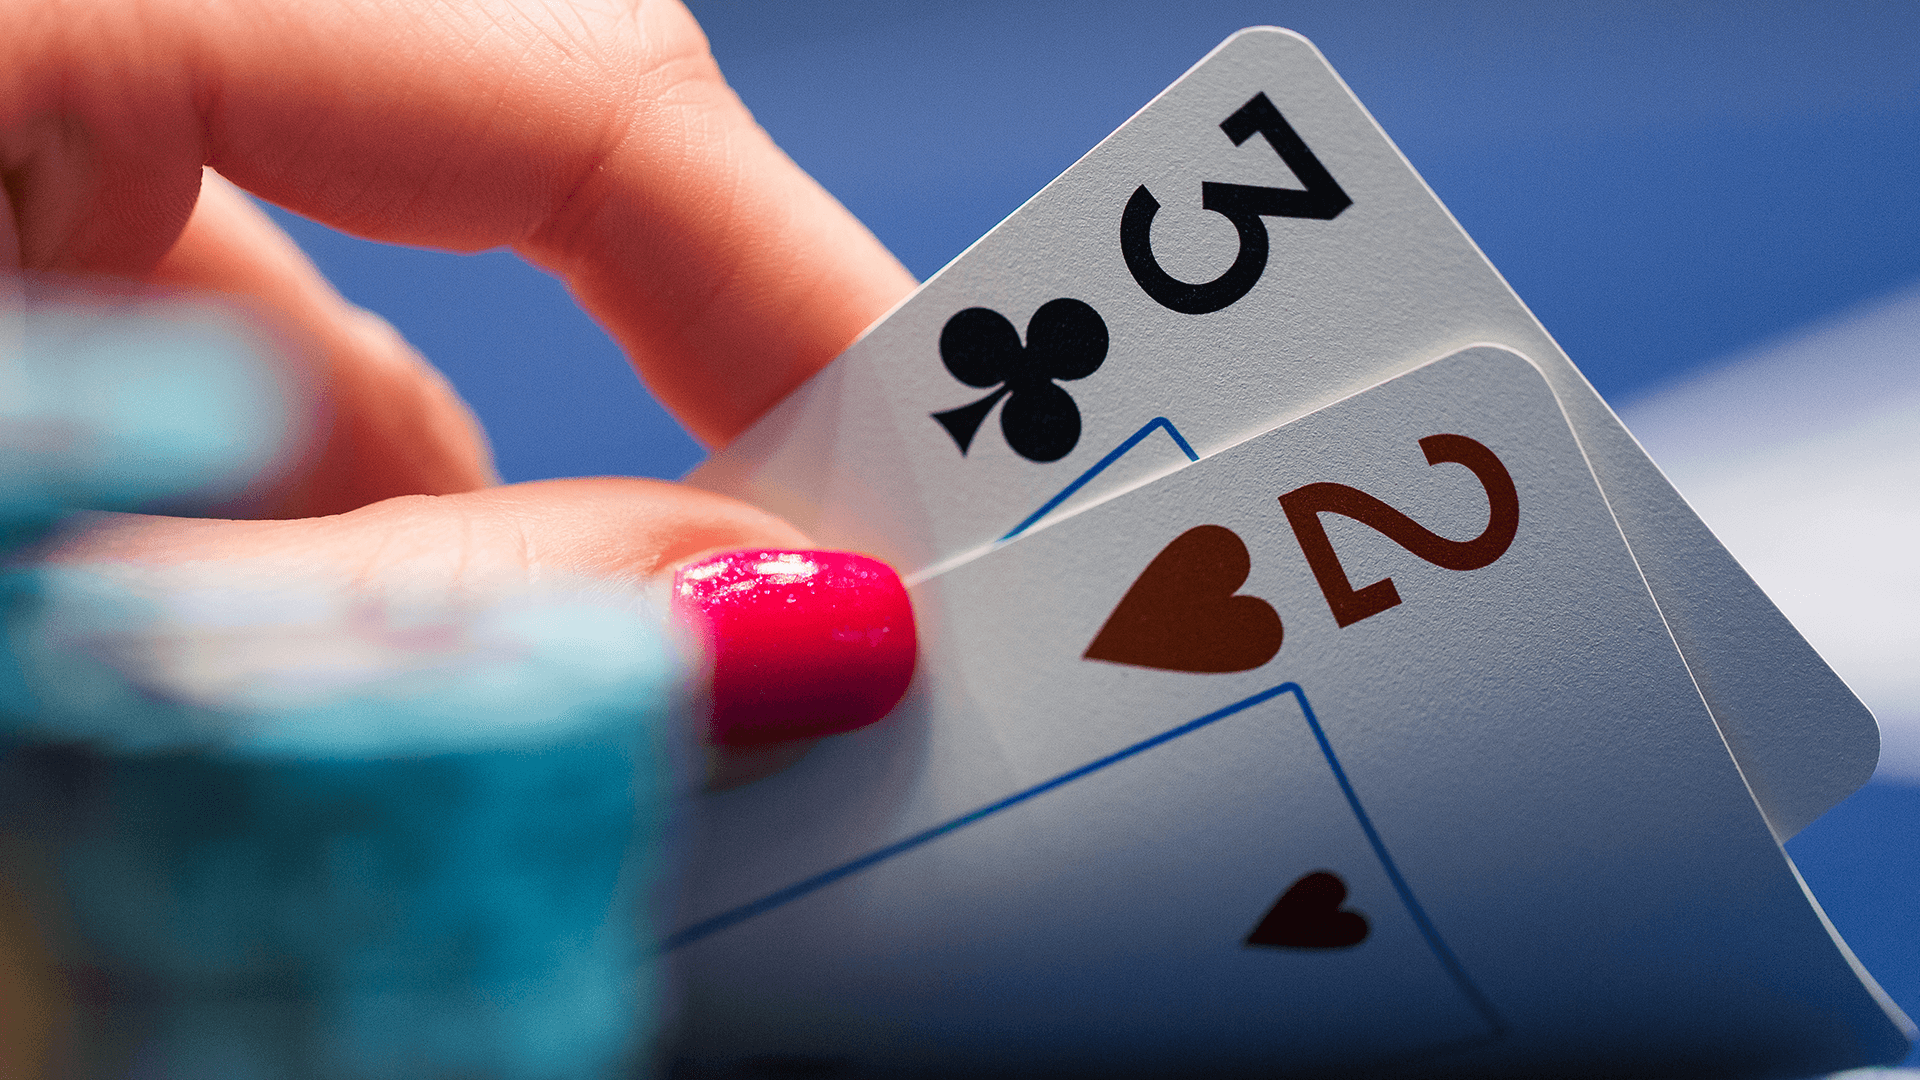 Evaluating Winning Poker Hands